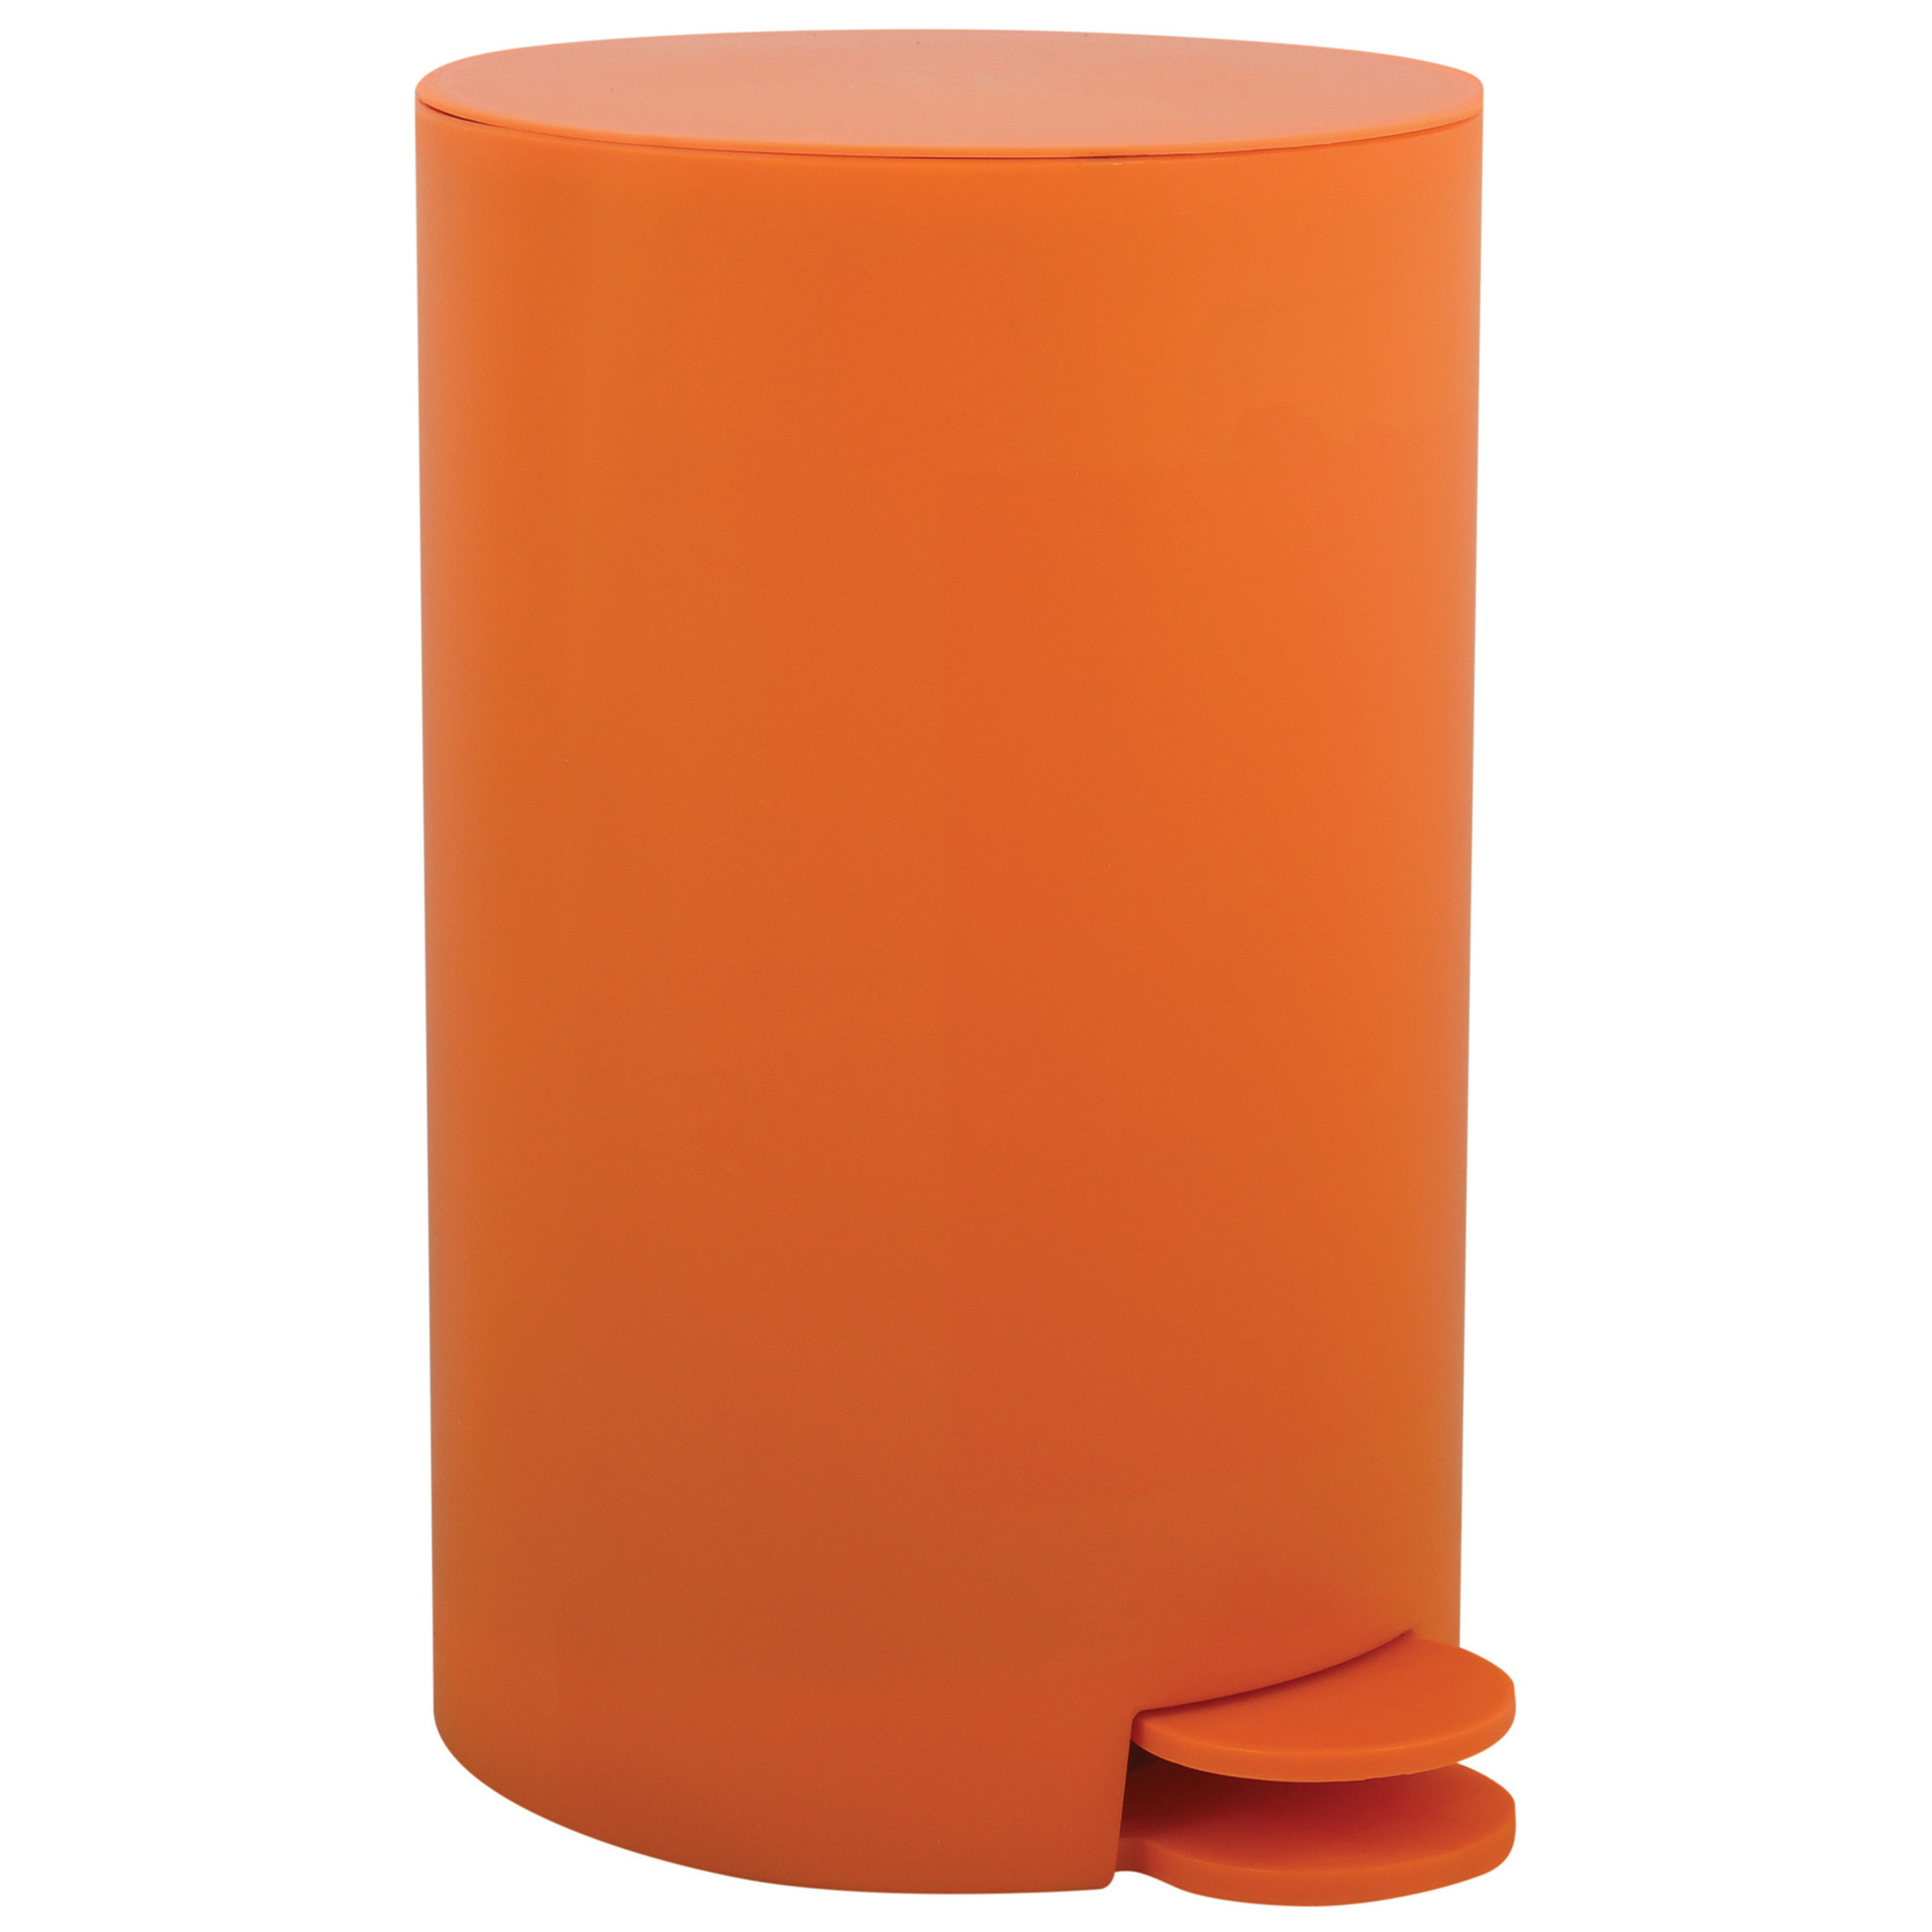 Prullenbak-pedaalemmer kunststof oranje 3 liter 15 x 27 cm Badkamer-toilet